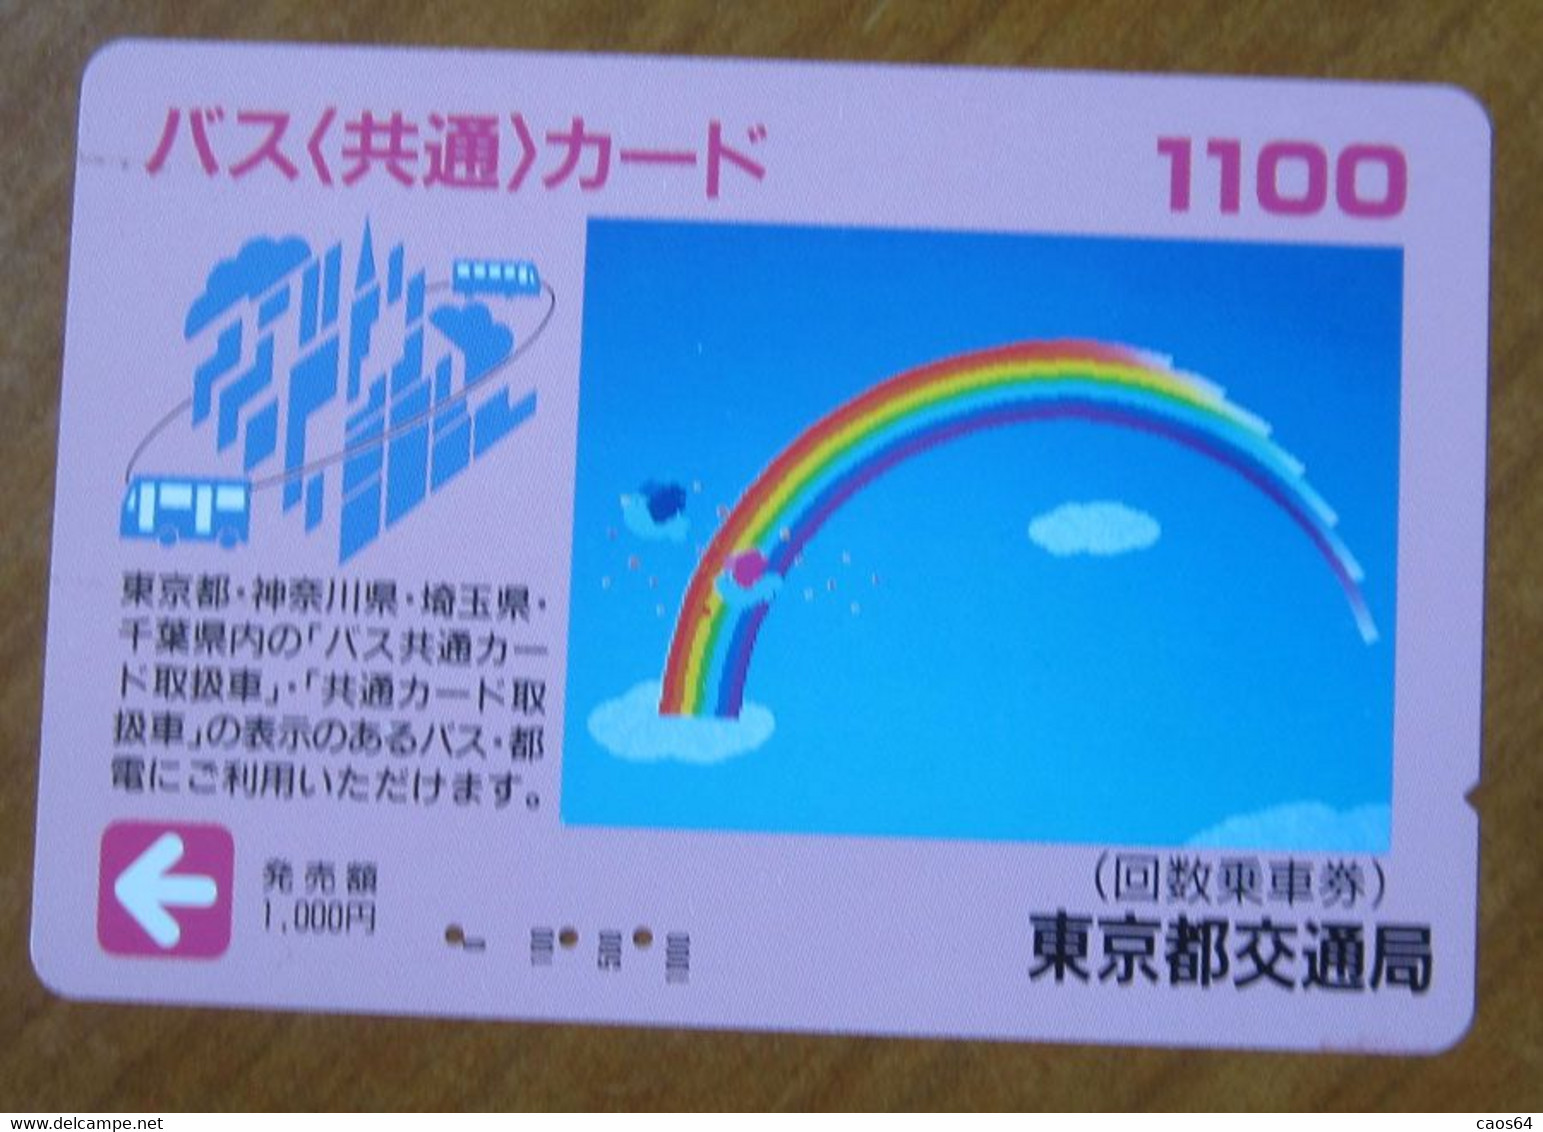 GIAPPONE Ticket Biglietto  Treni  Metro Bus Rainbow Pink Card - 1100 Usato - Wereld